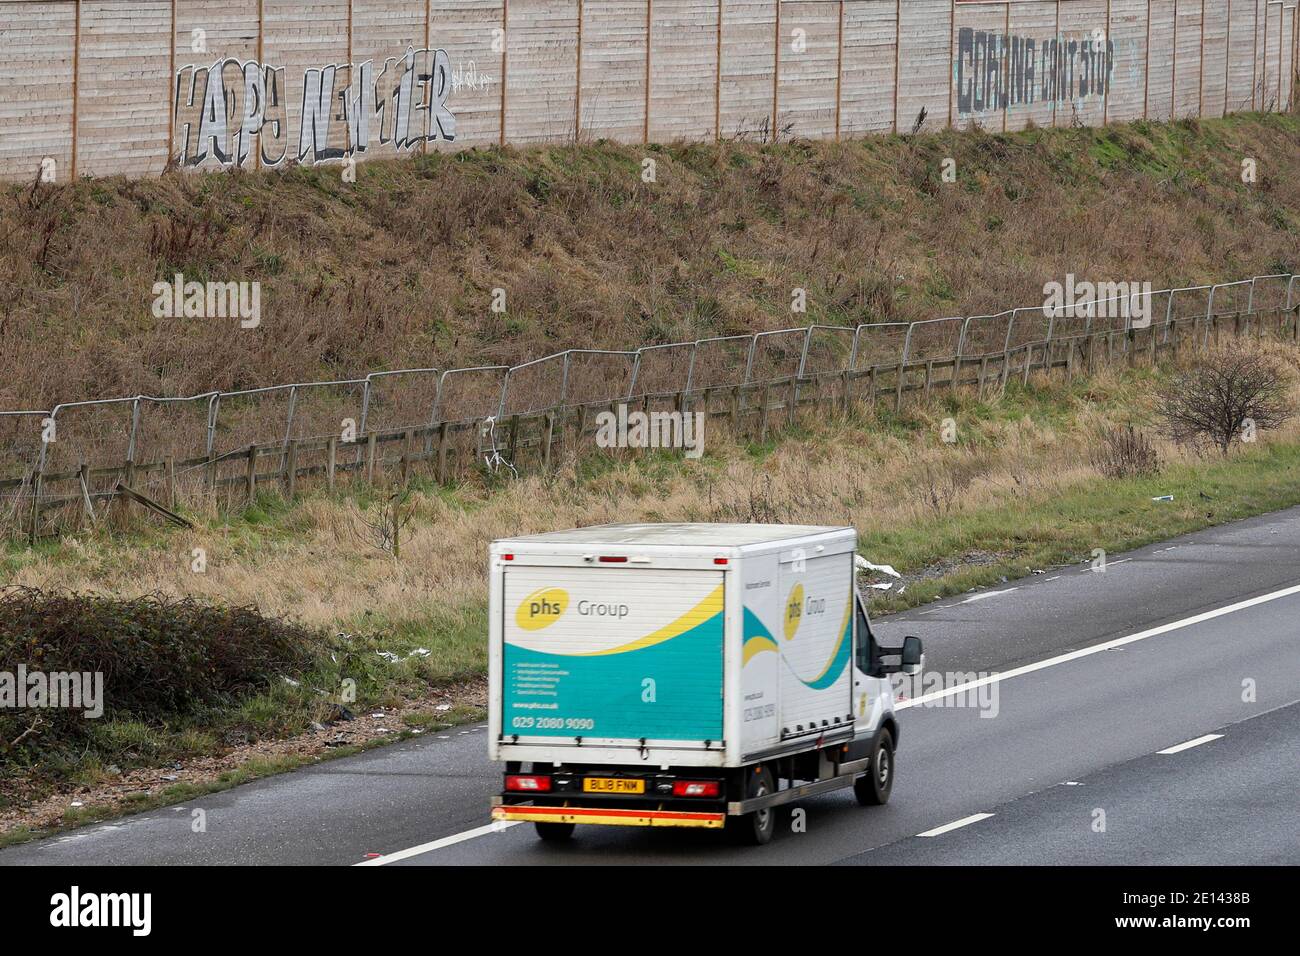 Shepshed, Leicestershire, UK. 4th January 2021. A phs group van passes coronavirus themed graffiti beside the M1 motorway.  Credit Darren Staples/Alamy Live News. Stock Photo